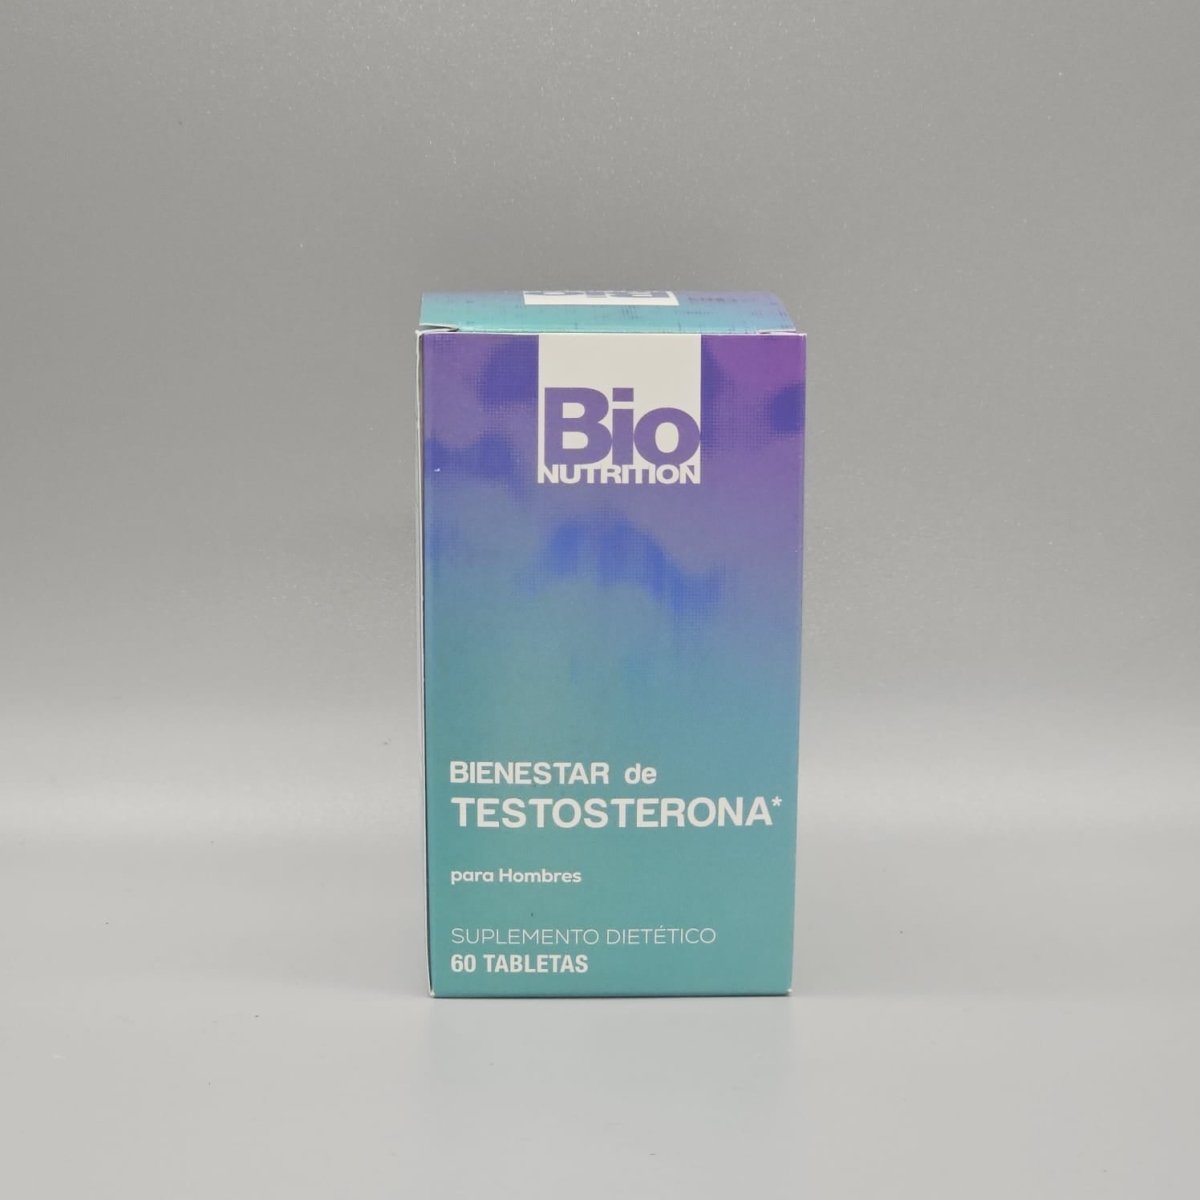 Testosterone Wellness for Men - 60 Tablets - Bio Nutrition